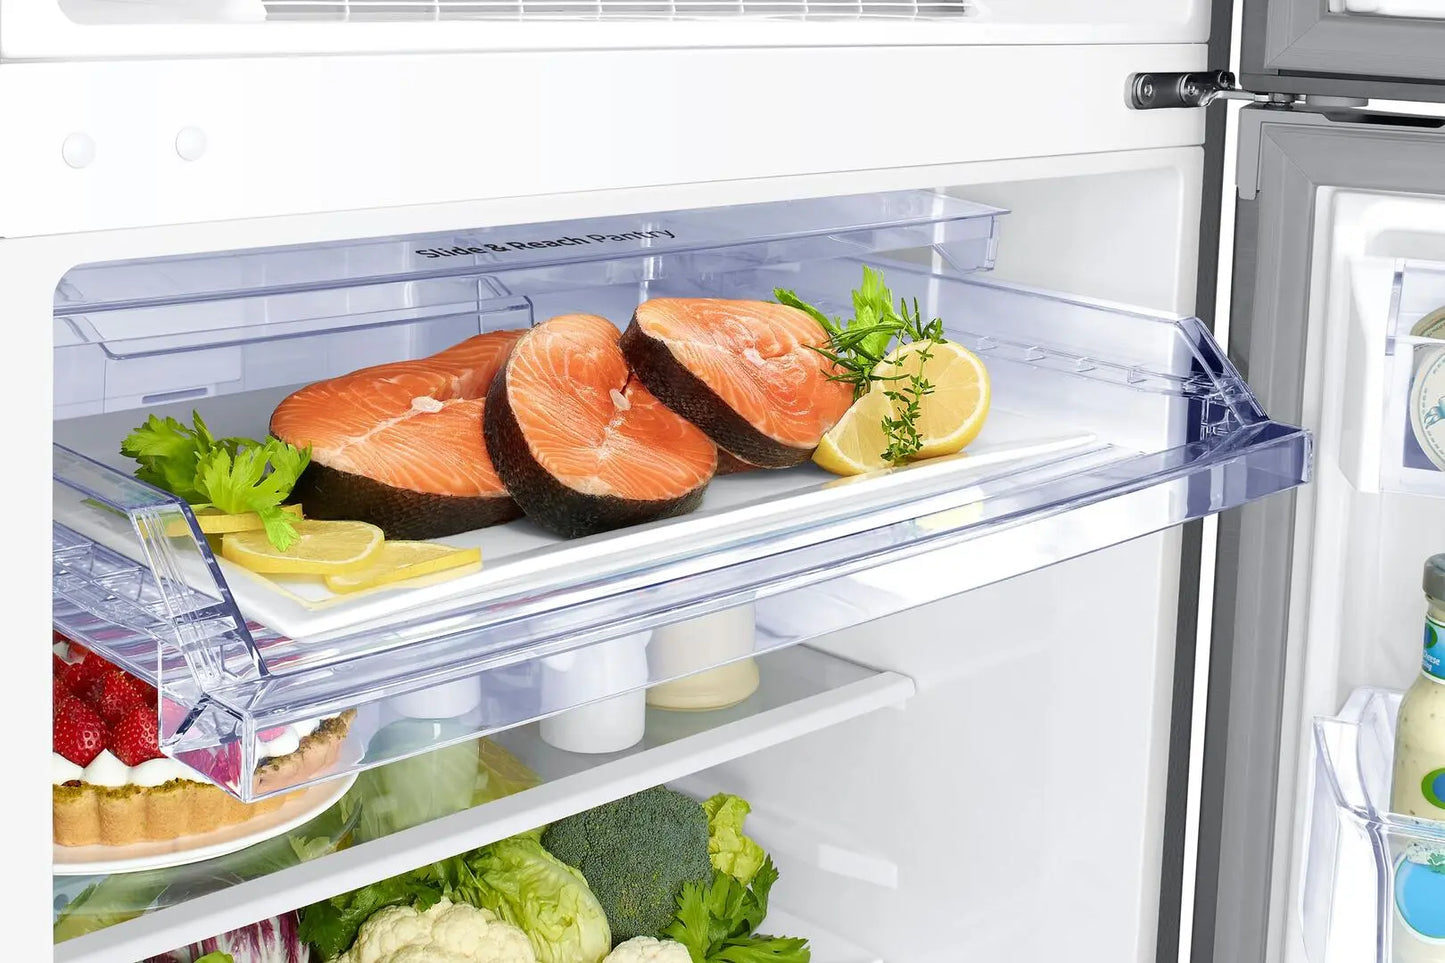 Top Freezer Refrigerator 29 Inch 17.6 Cu. Ft. (FlexZone and Ice Maker) - Fingerprint Resistant Stainless Steel | Samsung | Fridge.com